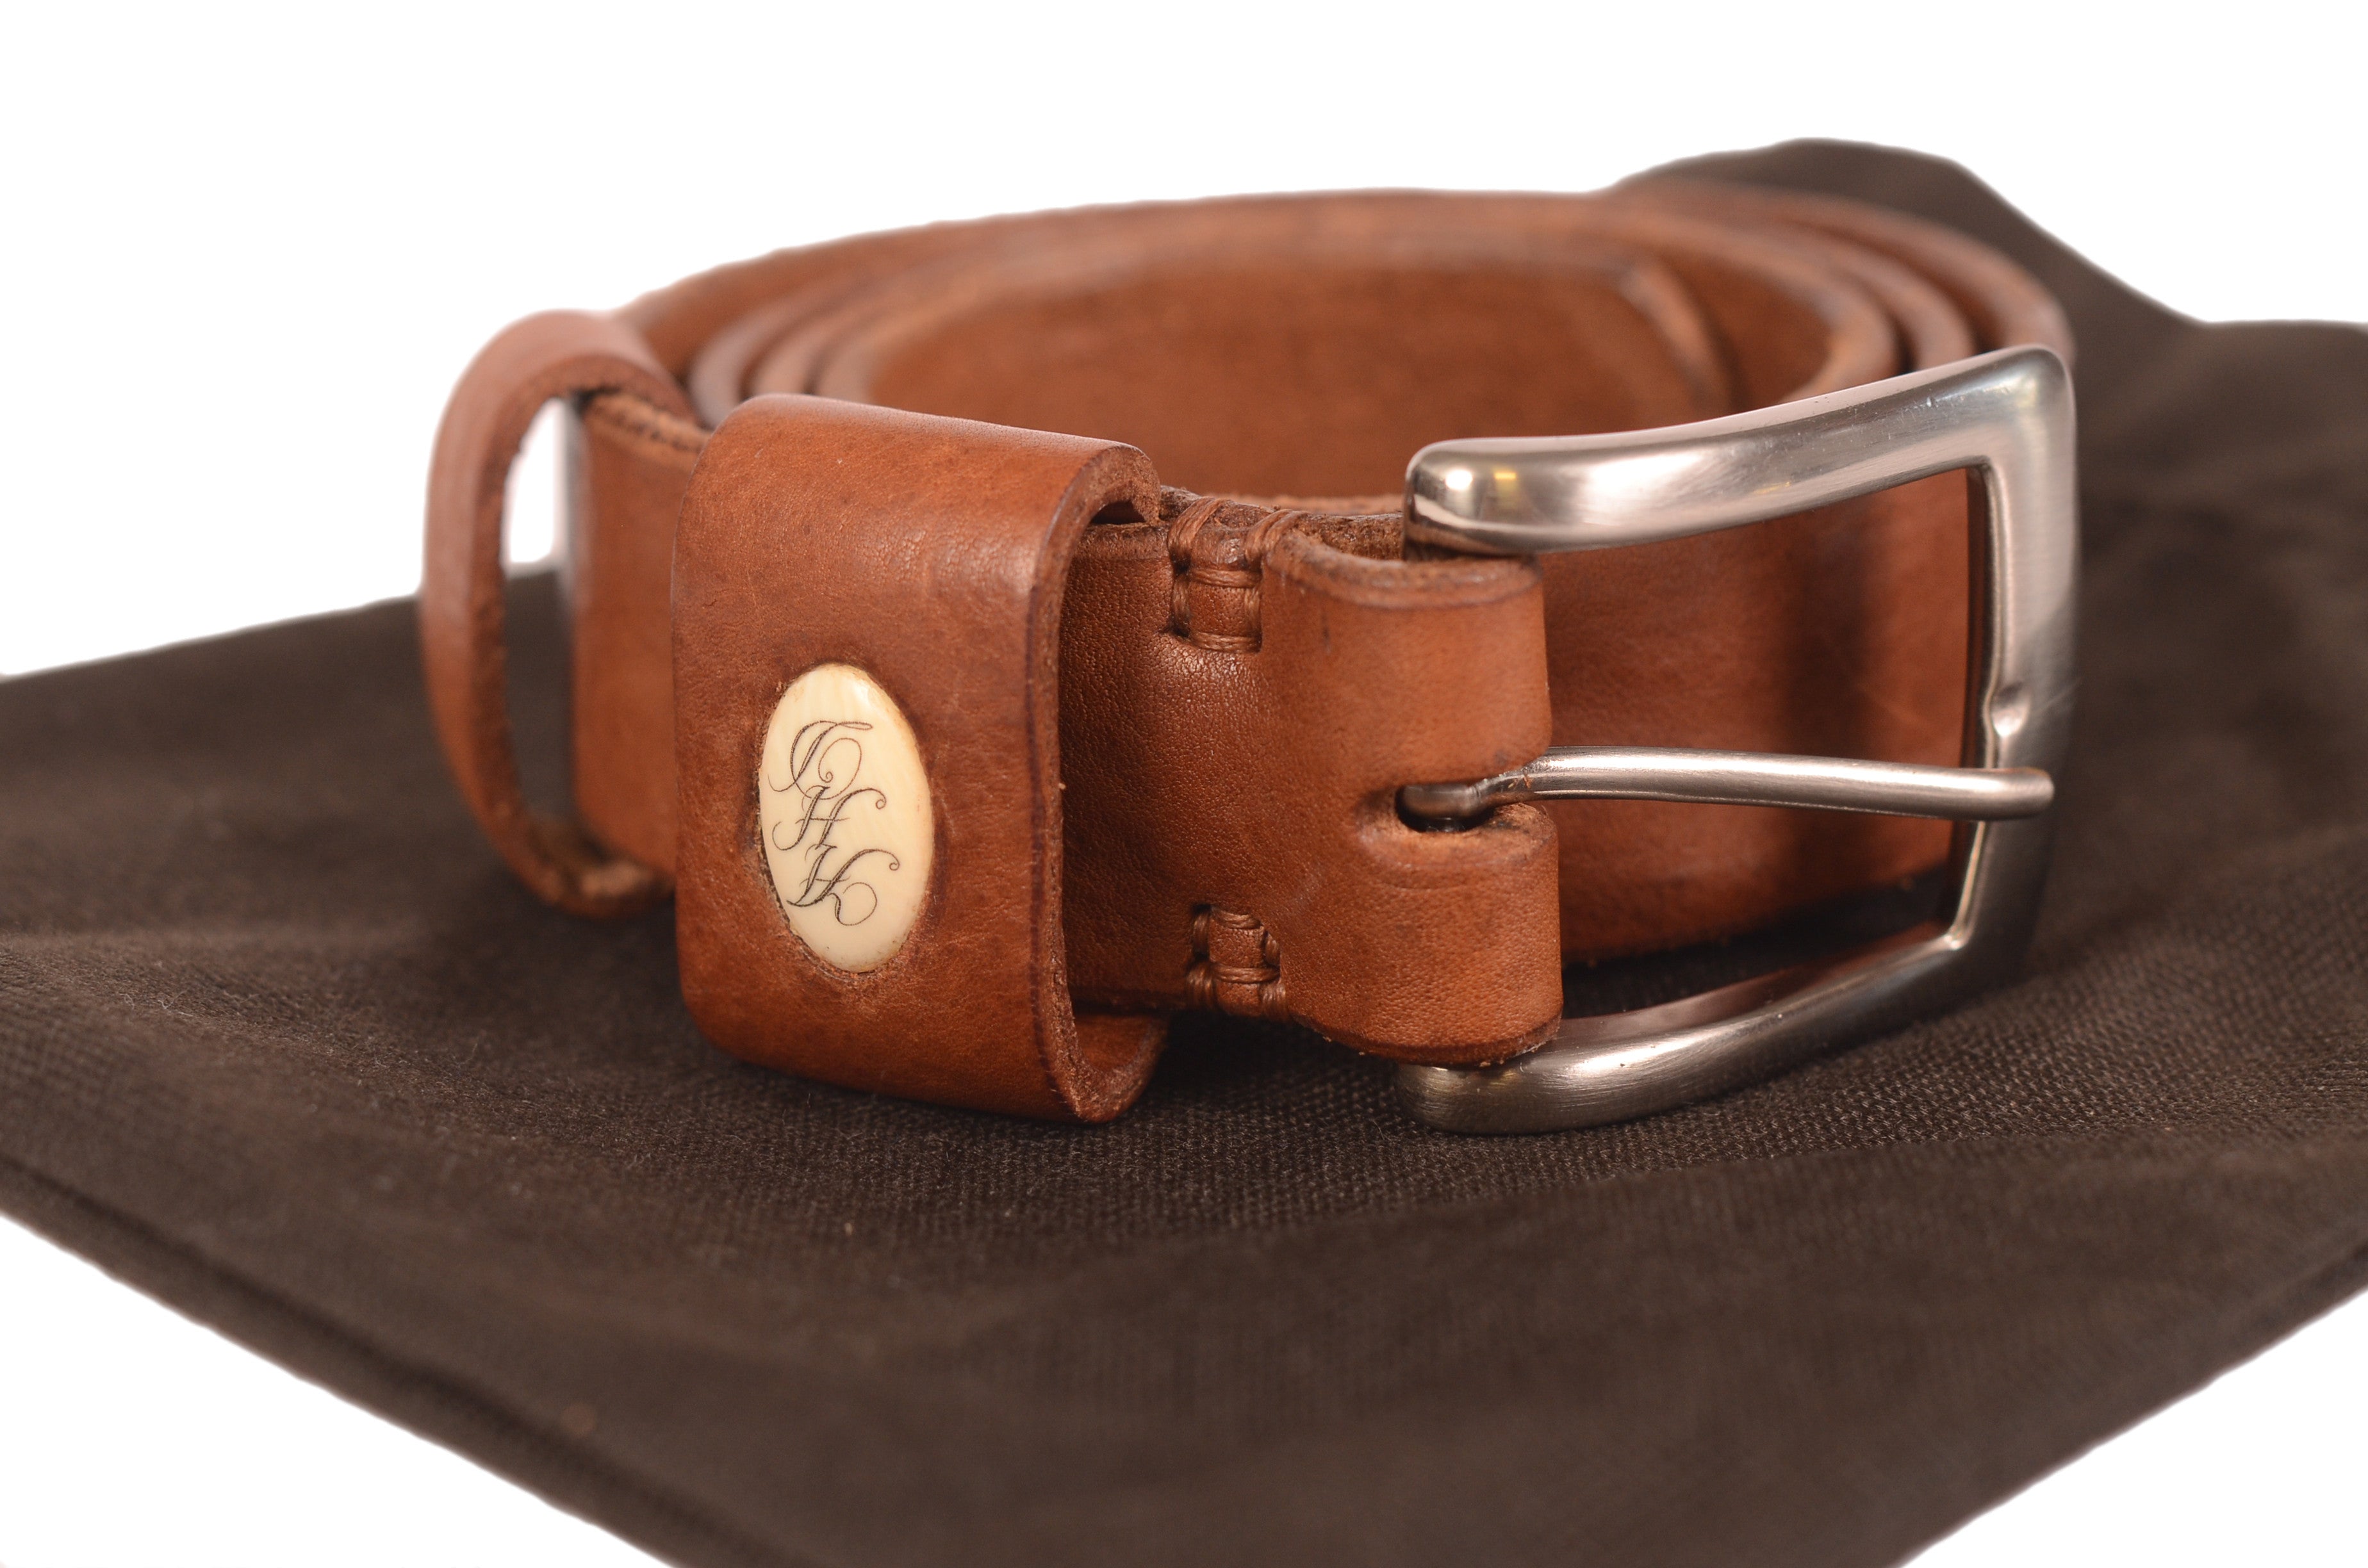 OLD HIDE ROMANELLI FIRENZE Hand Made Bespoke Brown Leather Belt 90cm 36" NEW ROMANELLI